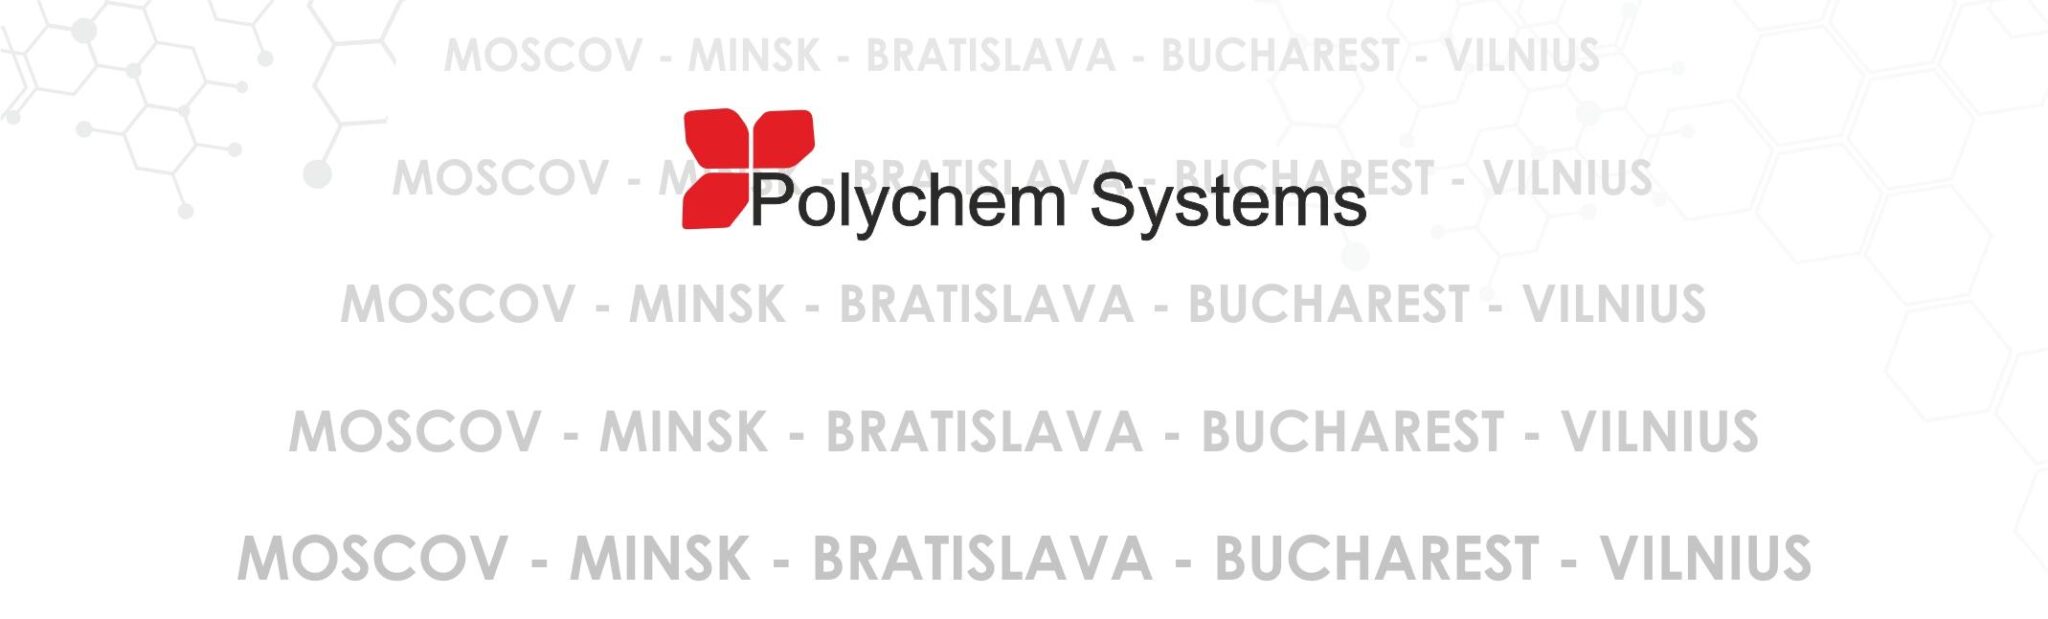 Polychem Systems na targach w Europie!